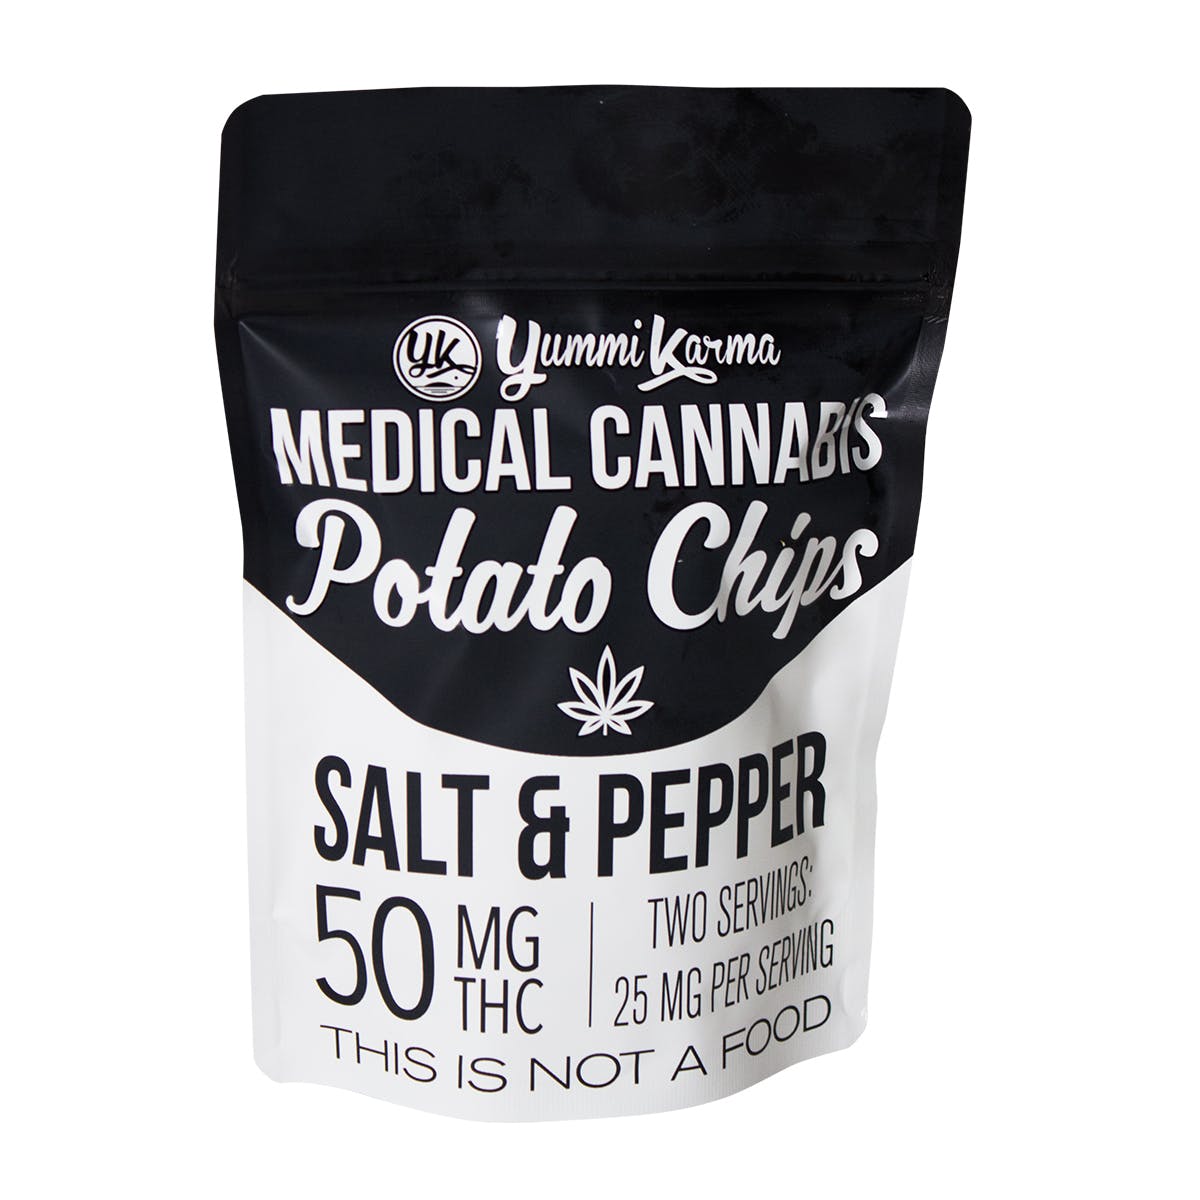 marijuana-dispensaries-natural-healing-remedies-in-bakersfield-medical-cannabis-potato-chips-2c-salt-a-pepper-50mg